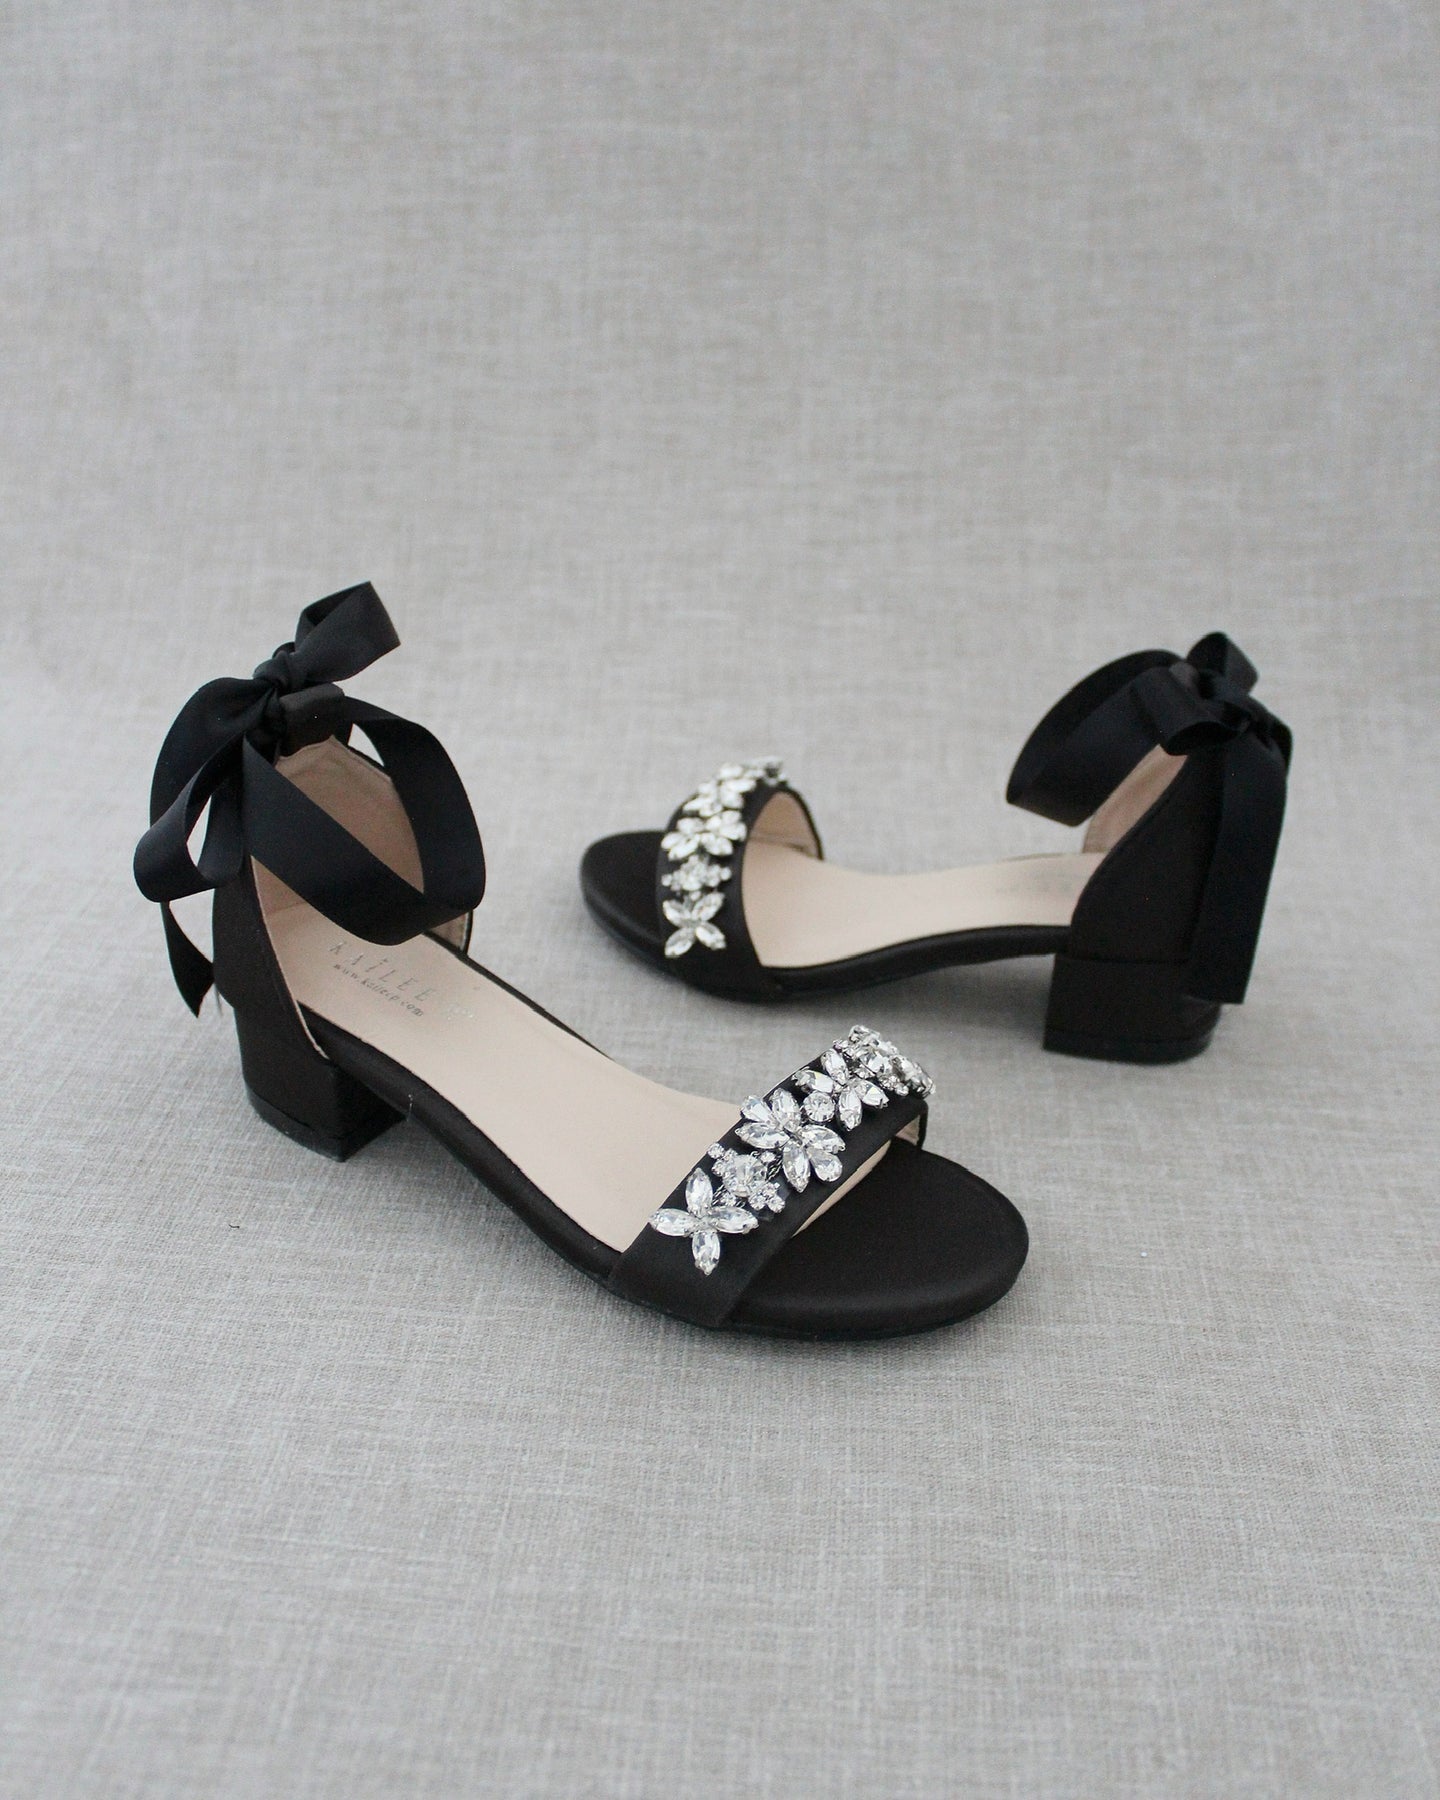 Buy Women Silver Casual Sandals Online | SKU: 40-67-27-37-Metro Shoes